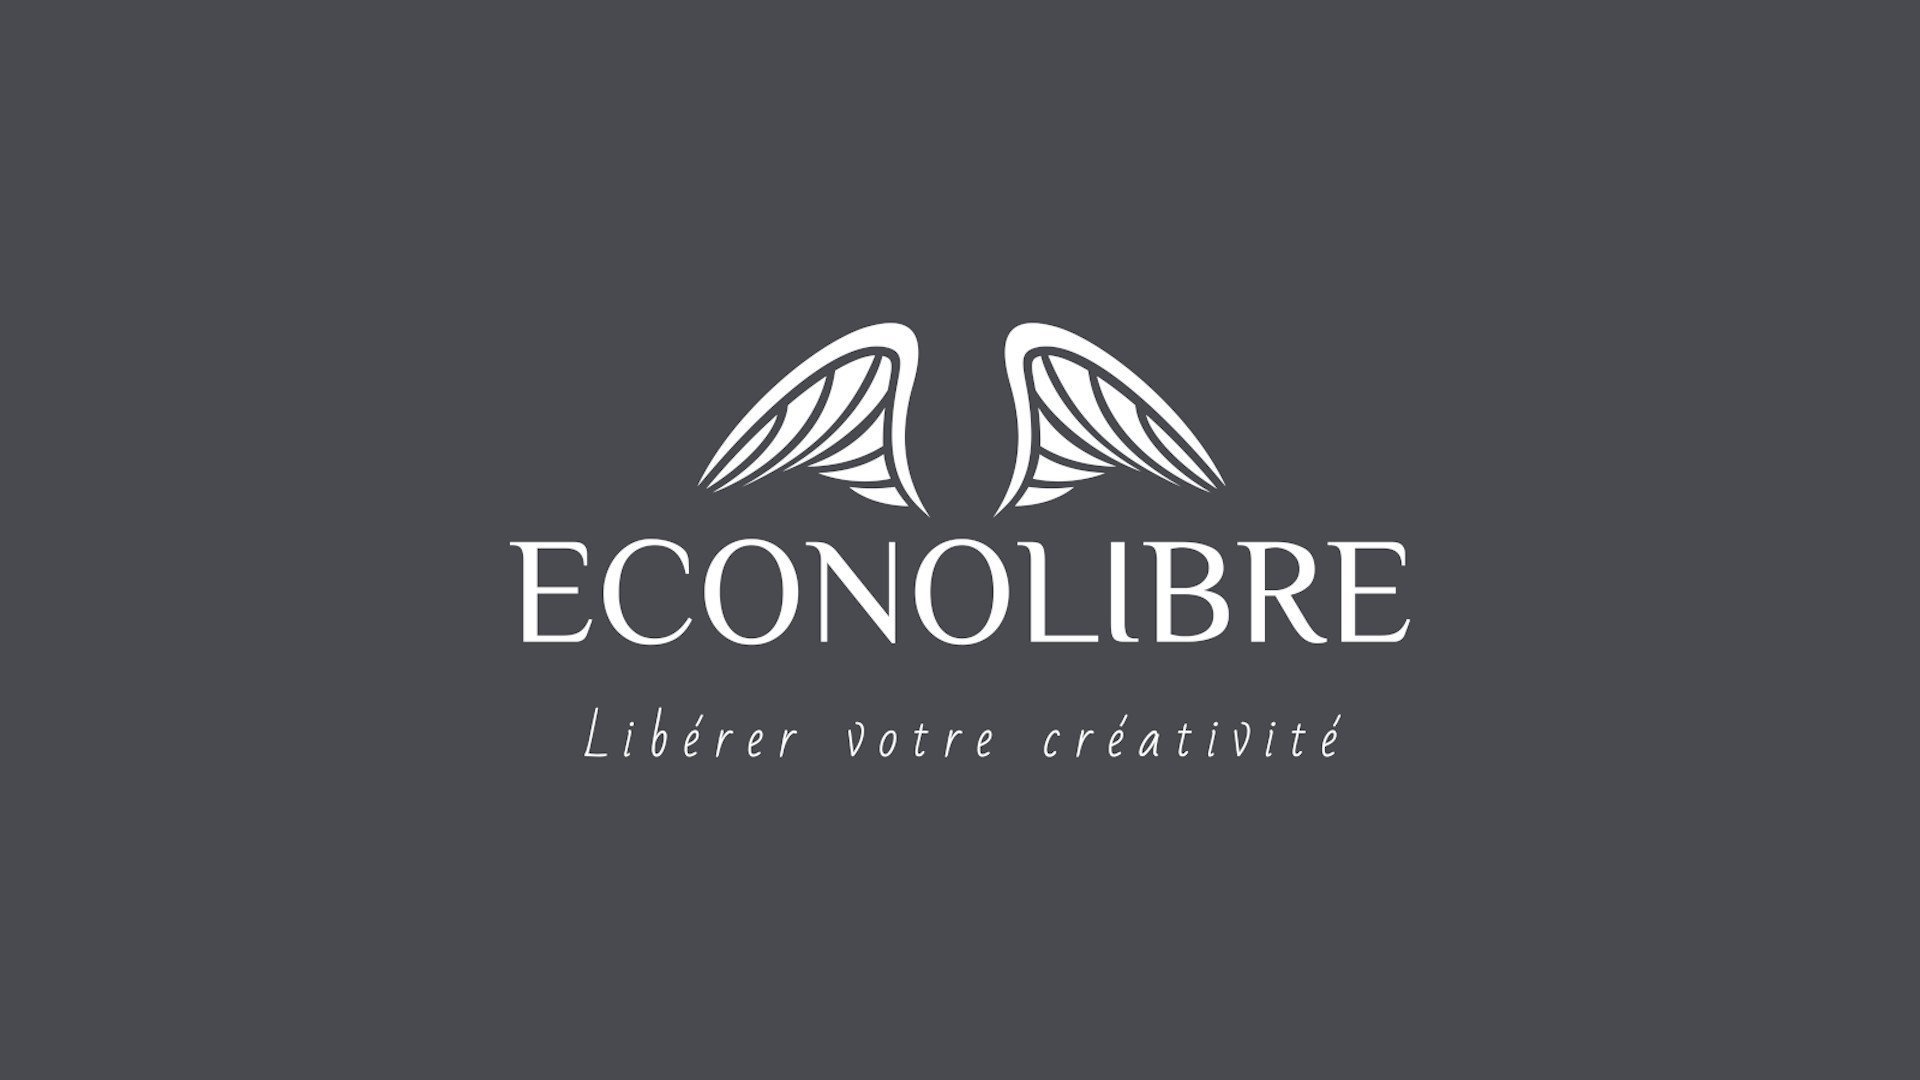 ECONOLIBRE White Logo on black 1920x1080.jpg